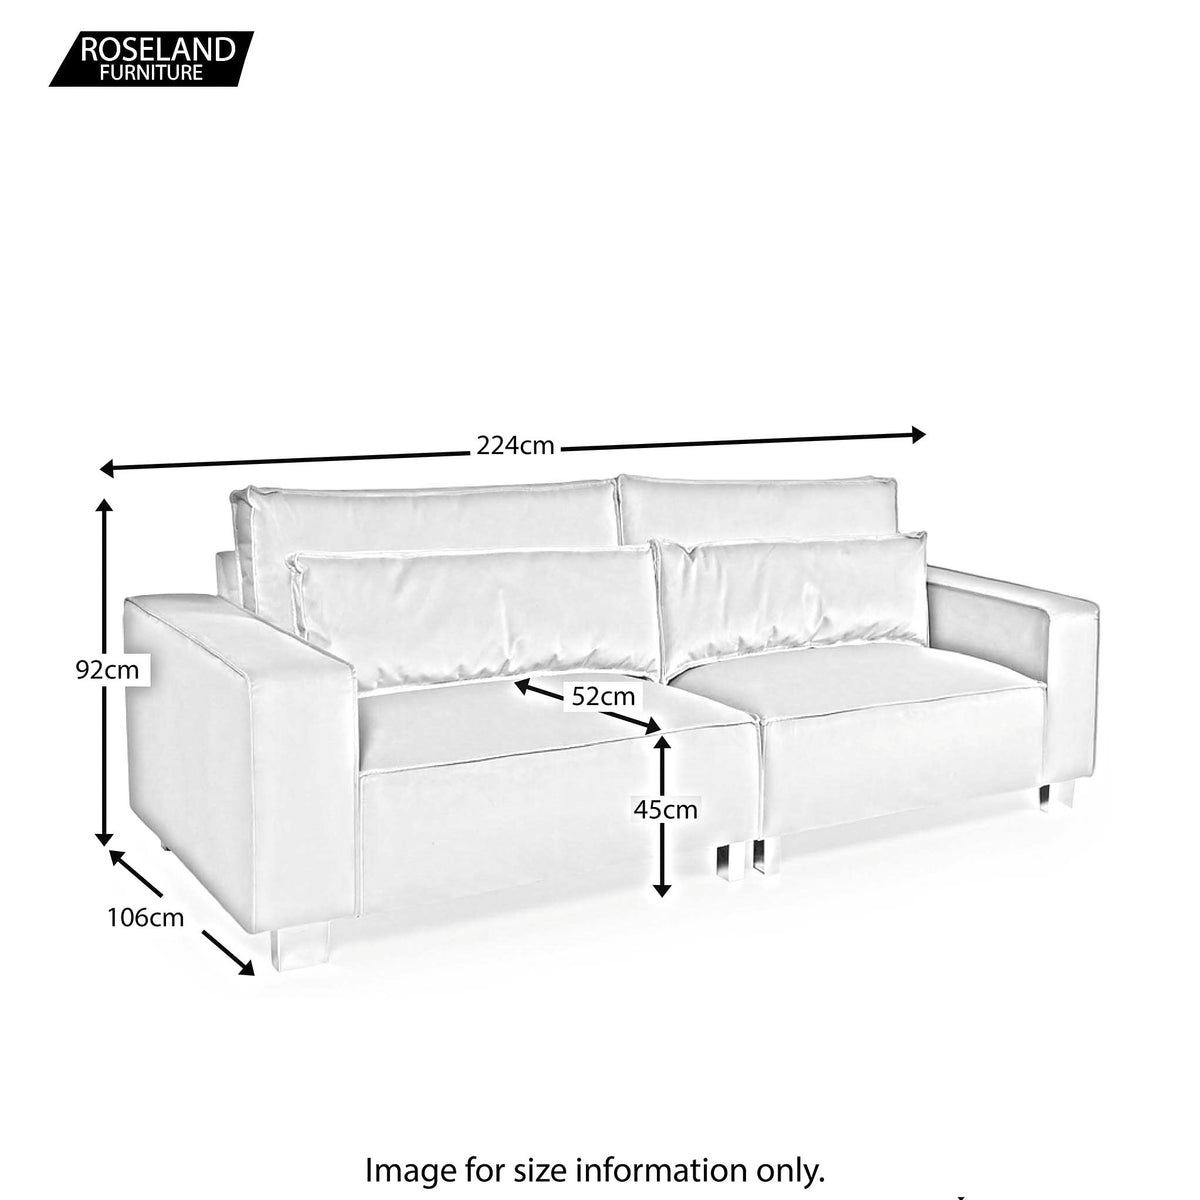 Sloane Luxe Chenille 2 Seat Sofa - Size Guide